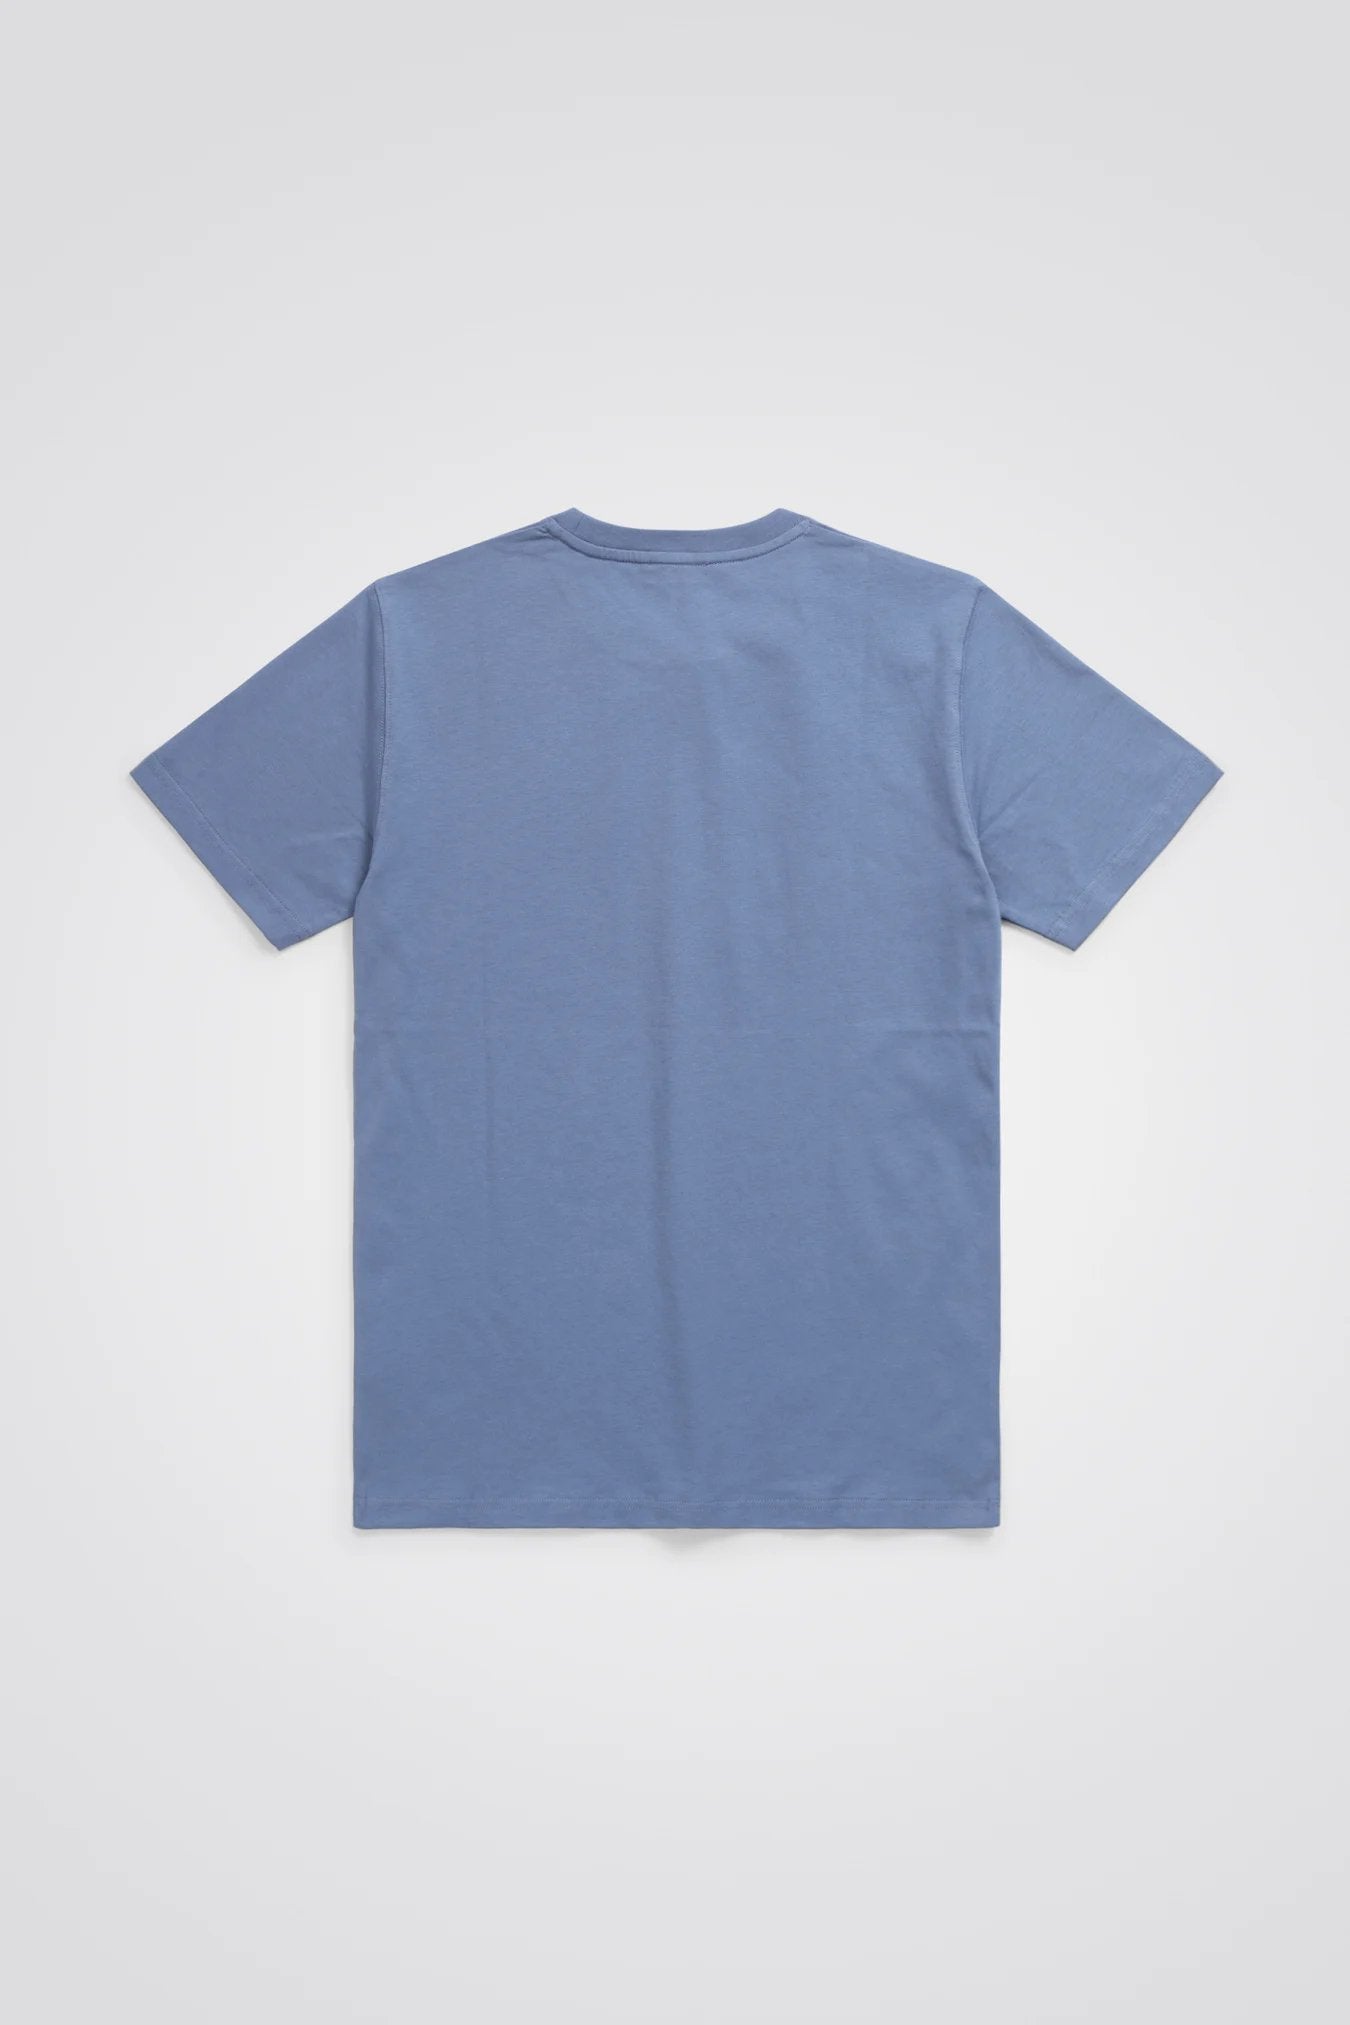 Niels Slim Organic T-Shirt - Norse Projects - Danali - N01-0559-LightStoneBlue-M